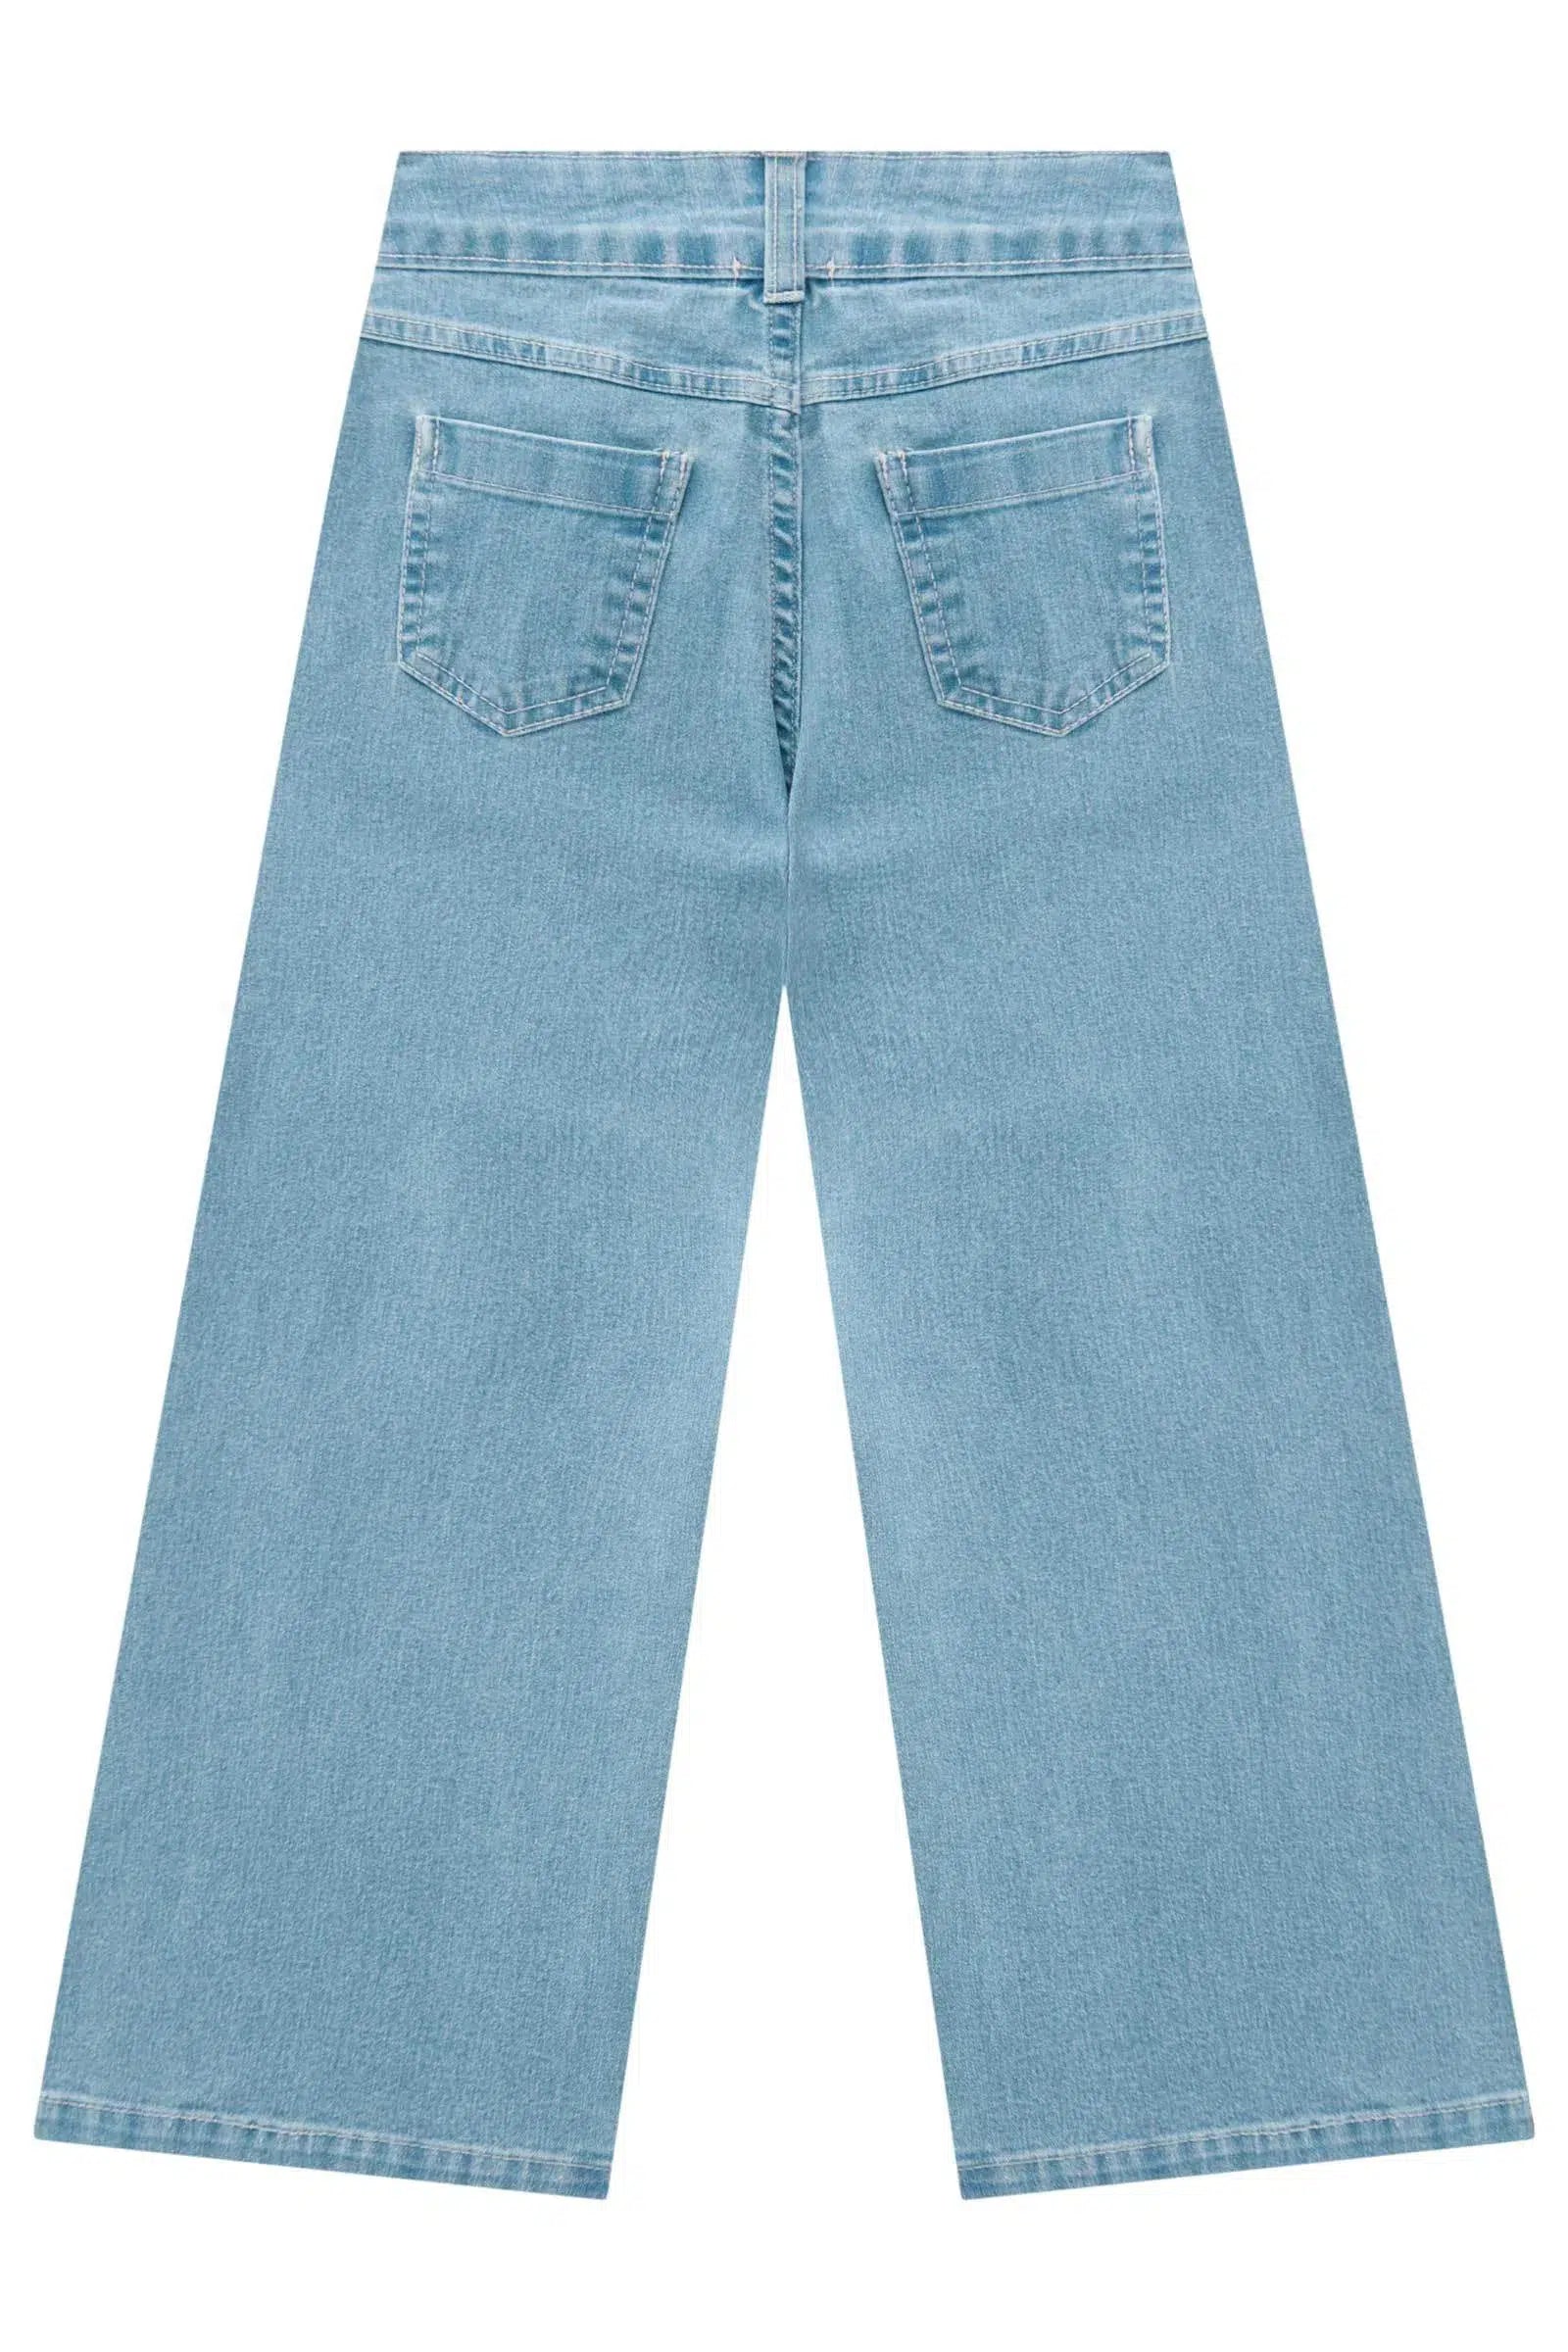 Calça Wide Leg em Jeans Bellini com Elastano 72303 Infanti